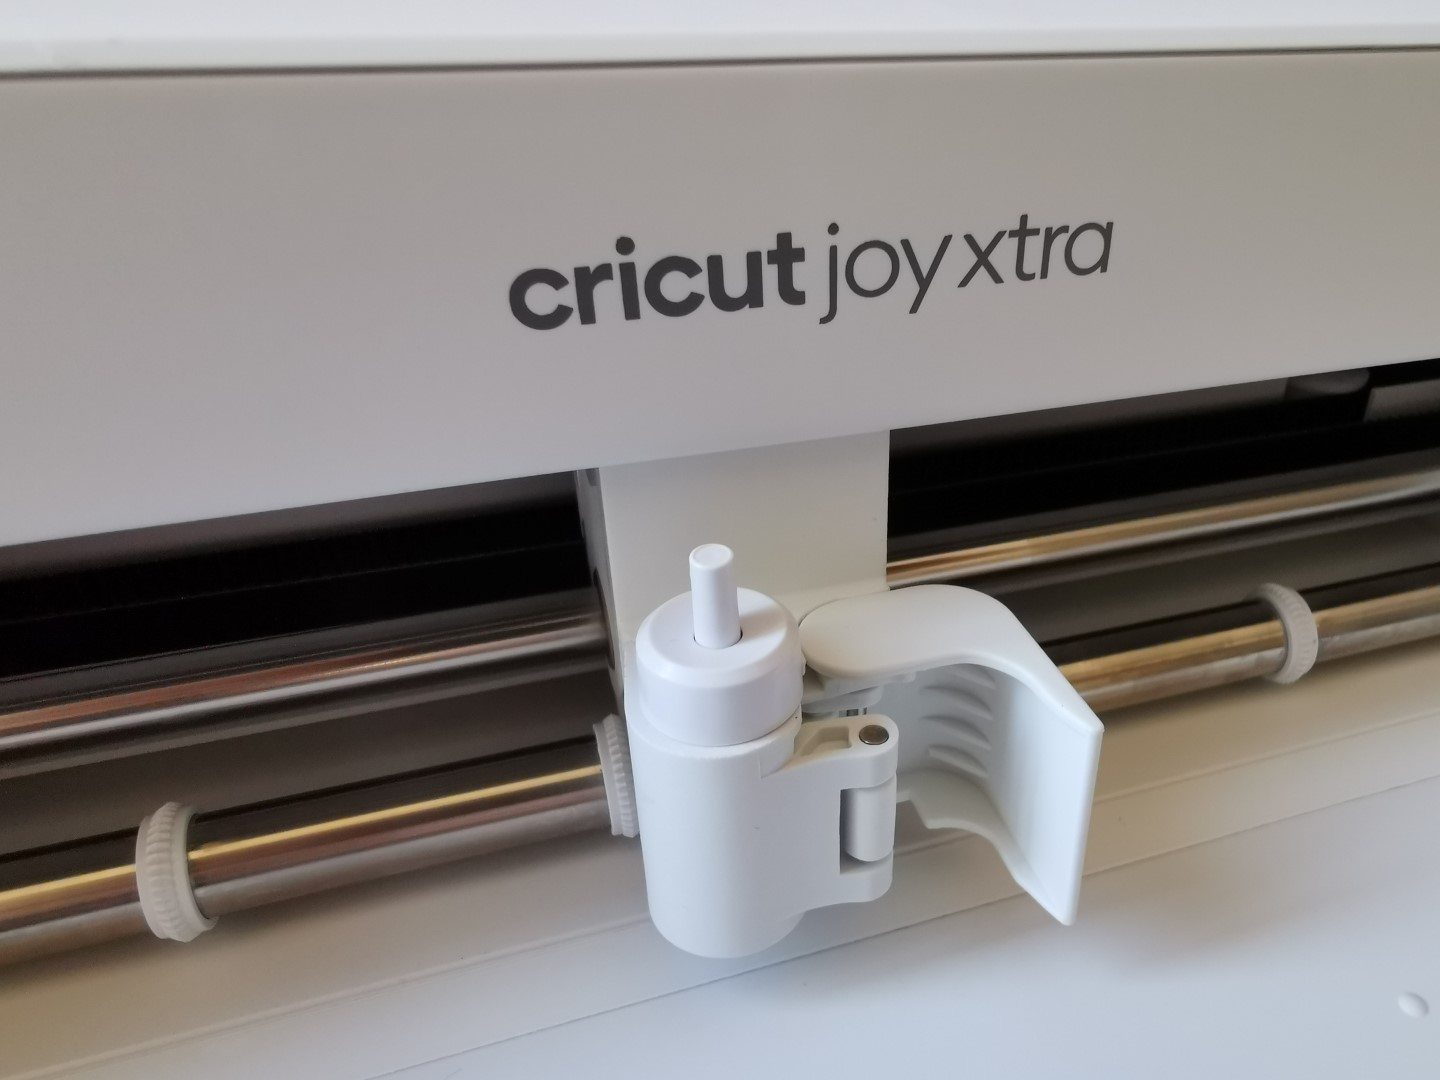 Cricut Unveils Joy Xtra - Making it Easier Than Ever to DIY - Impulse Gamer